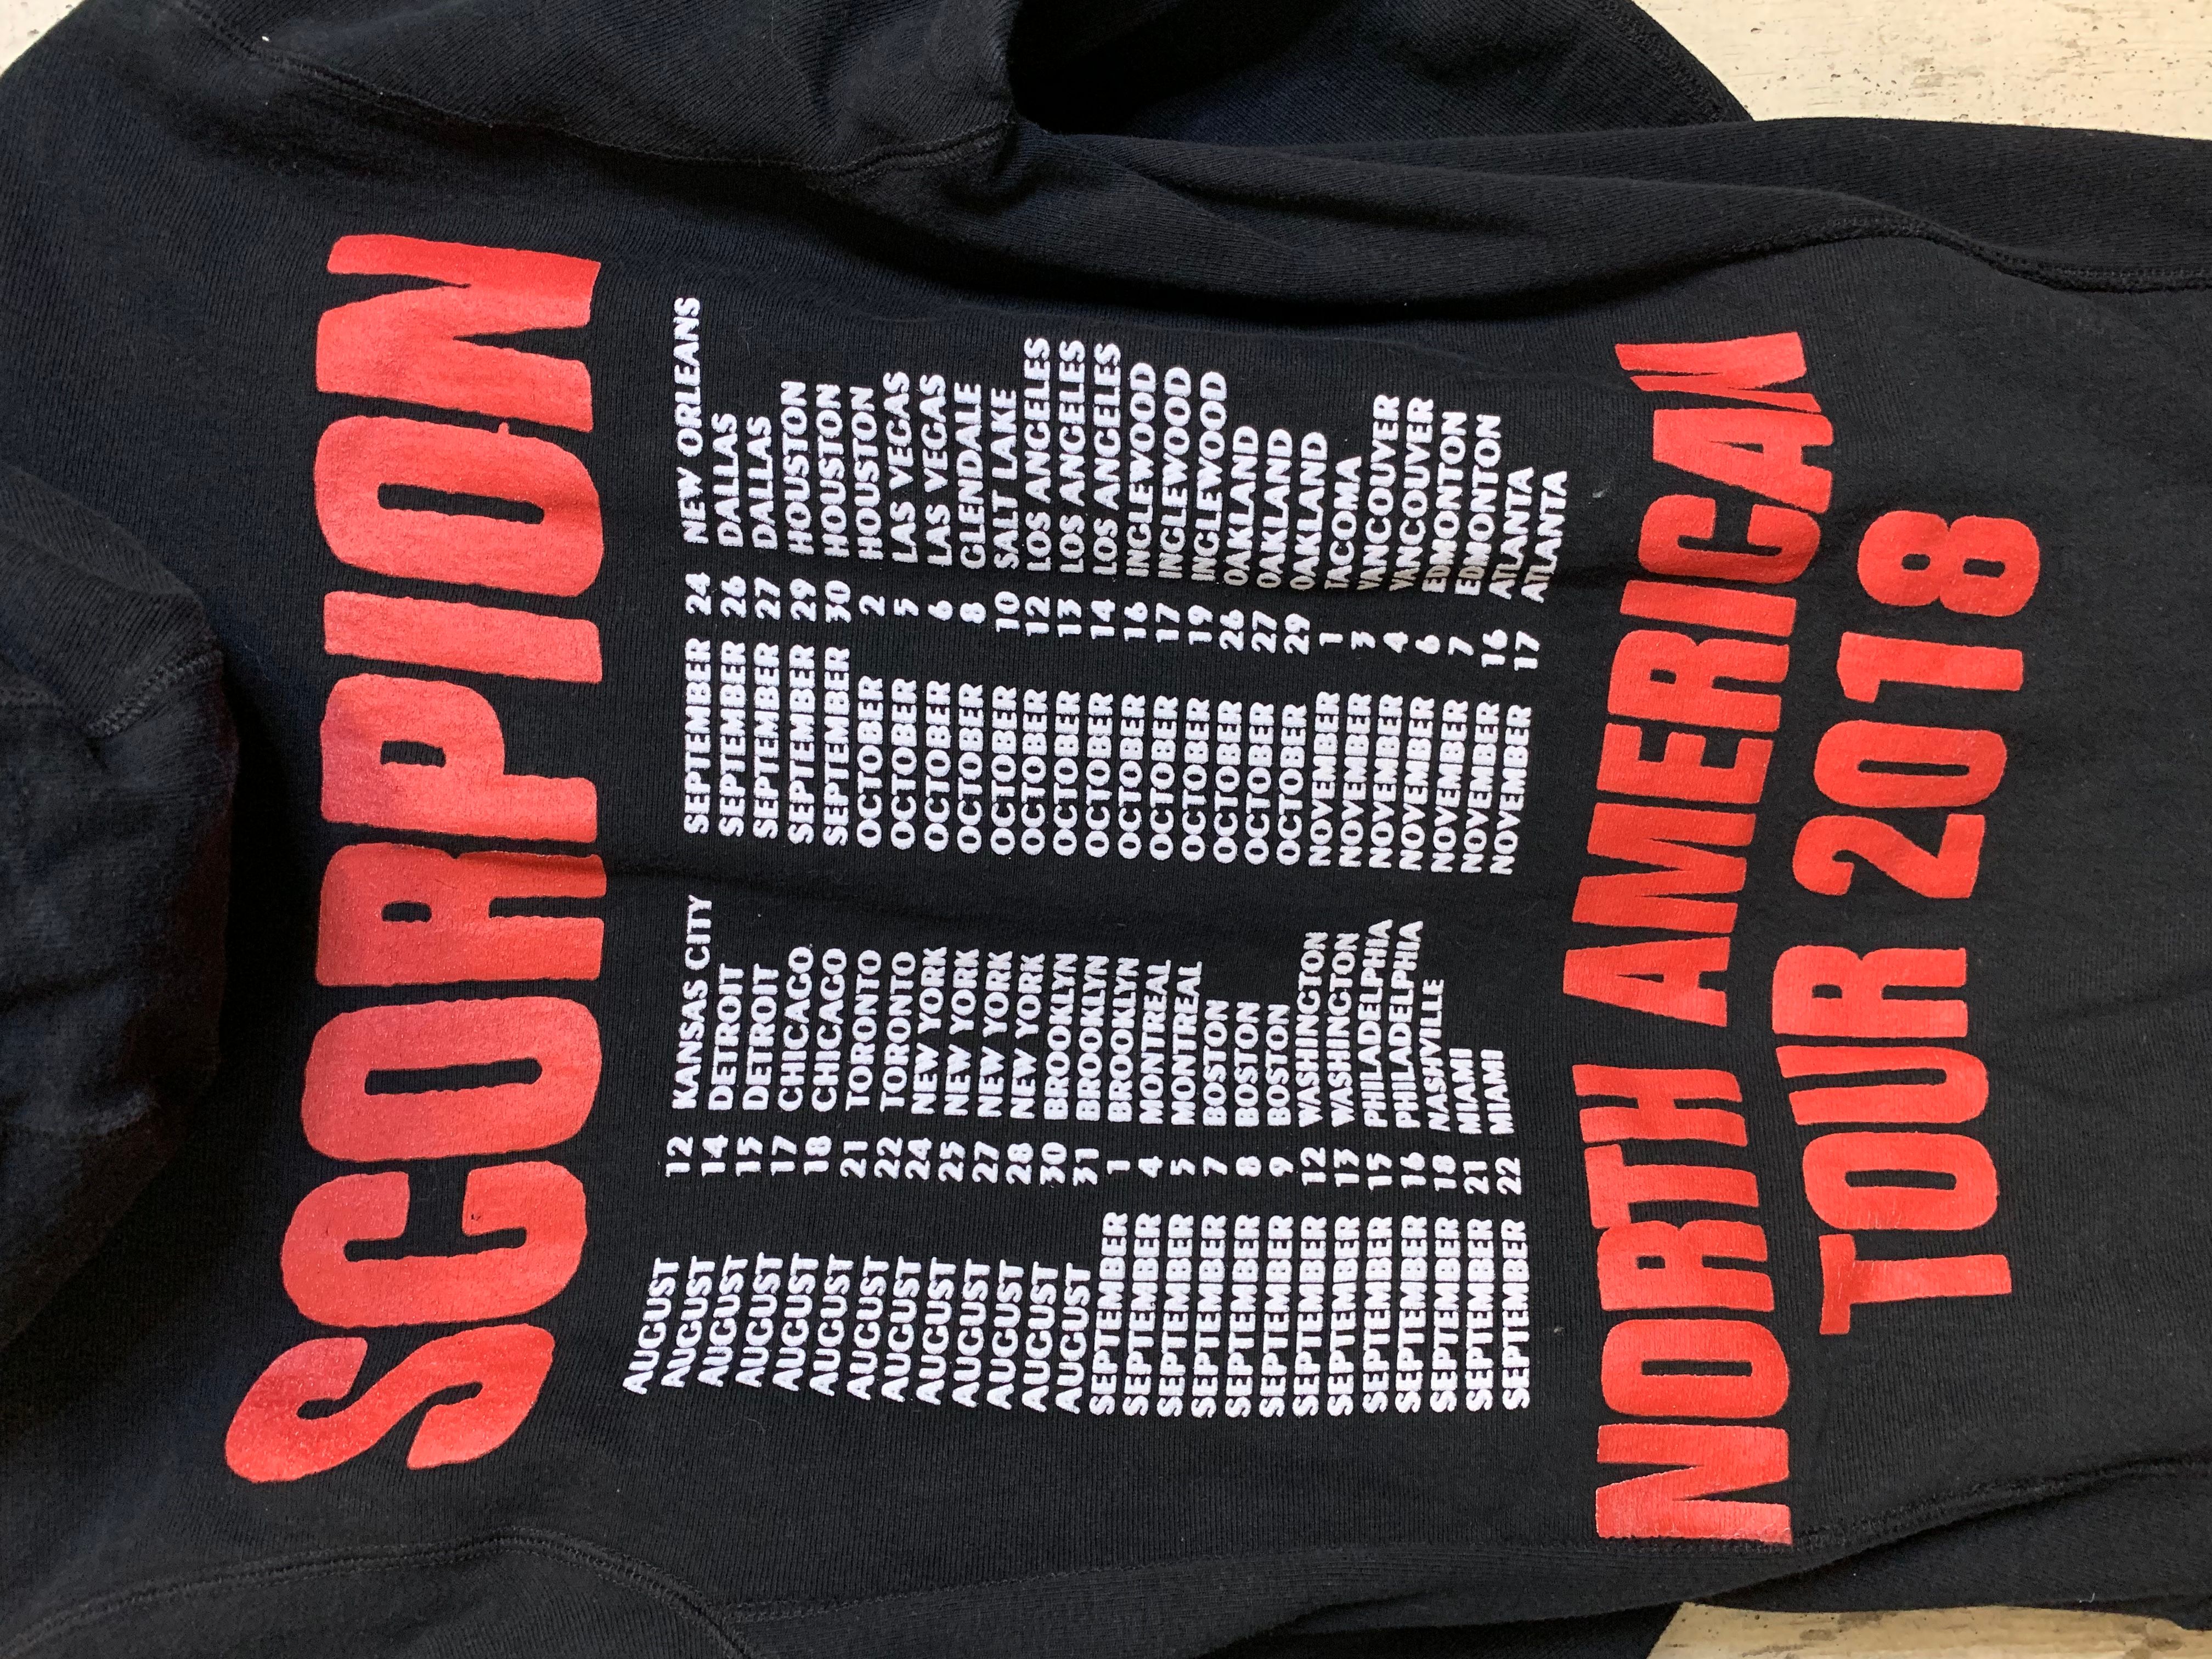 Vintage Drake Scorpion Tour 2018 America Tour Hoodie Size US S / EU 44-46 / 1 - 2 Preview